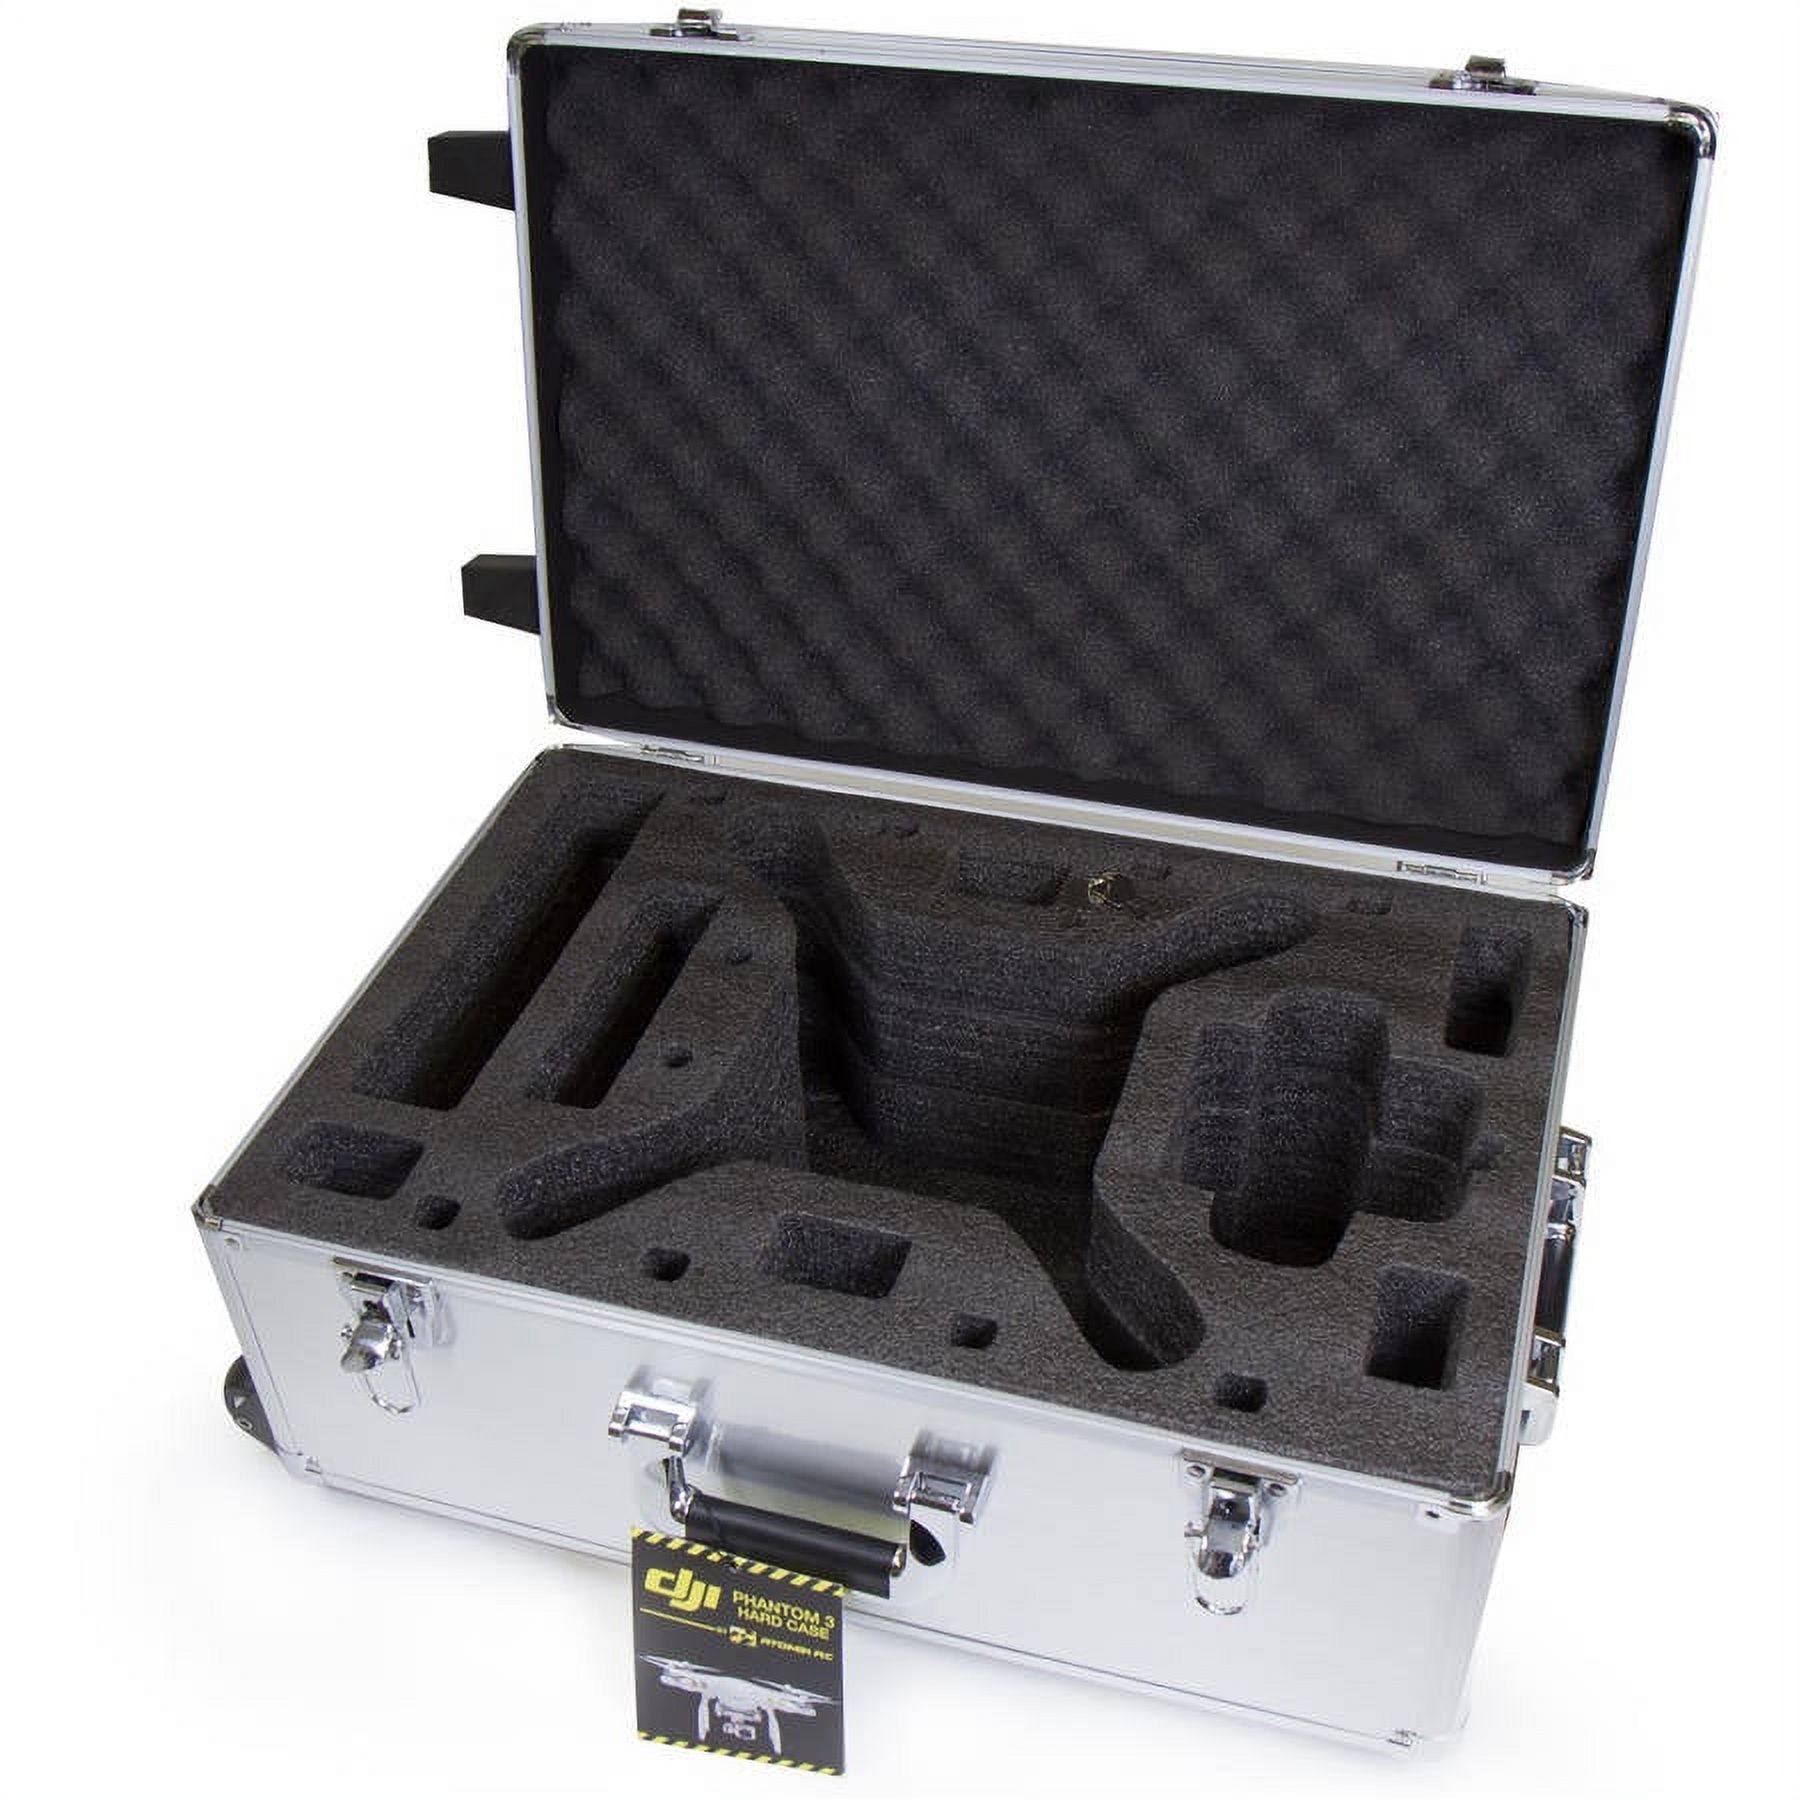 Atomik RC DJI Phantom 3 Professional Advanced RC Alloy Rolling Travel Hard Box Carry Case - image 2 of 6